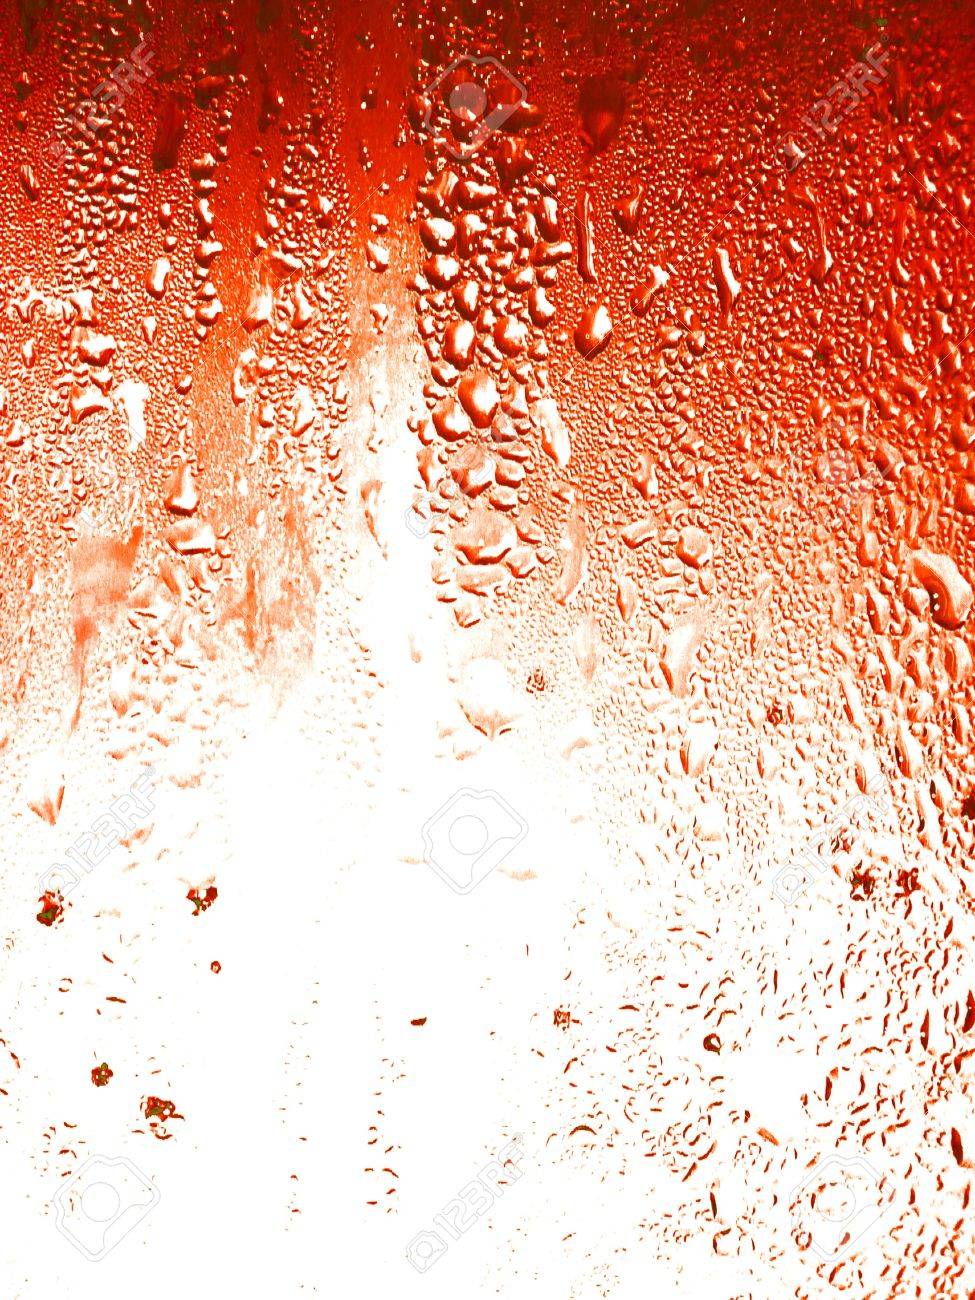 Redish Orange Soda Background Full Of Liquid Drops Stock Photo